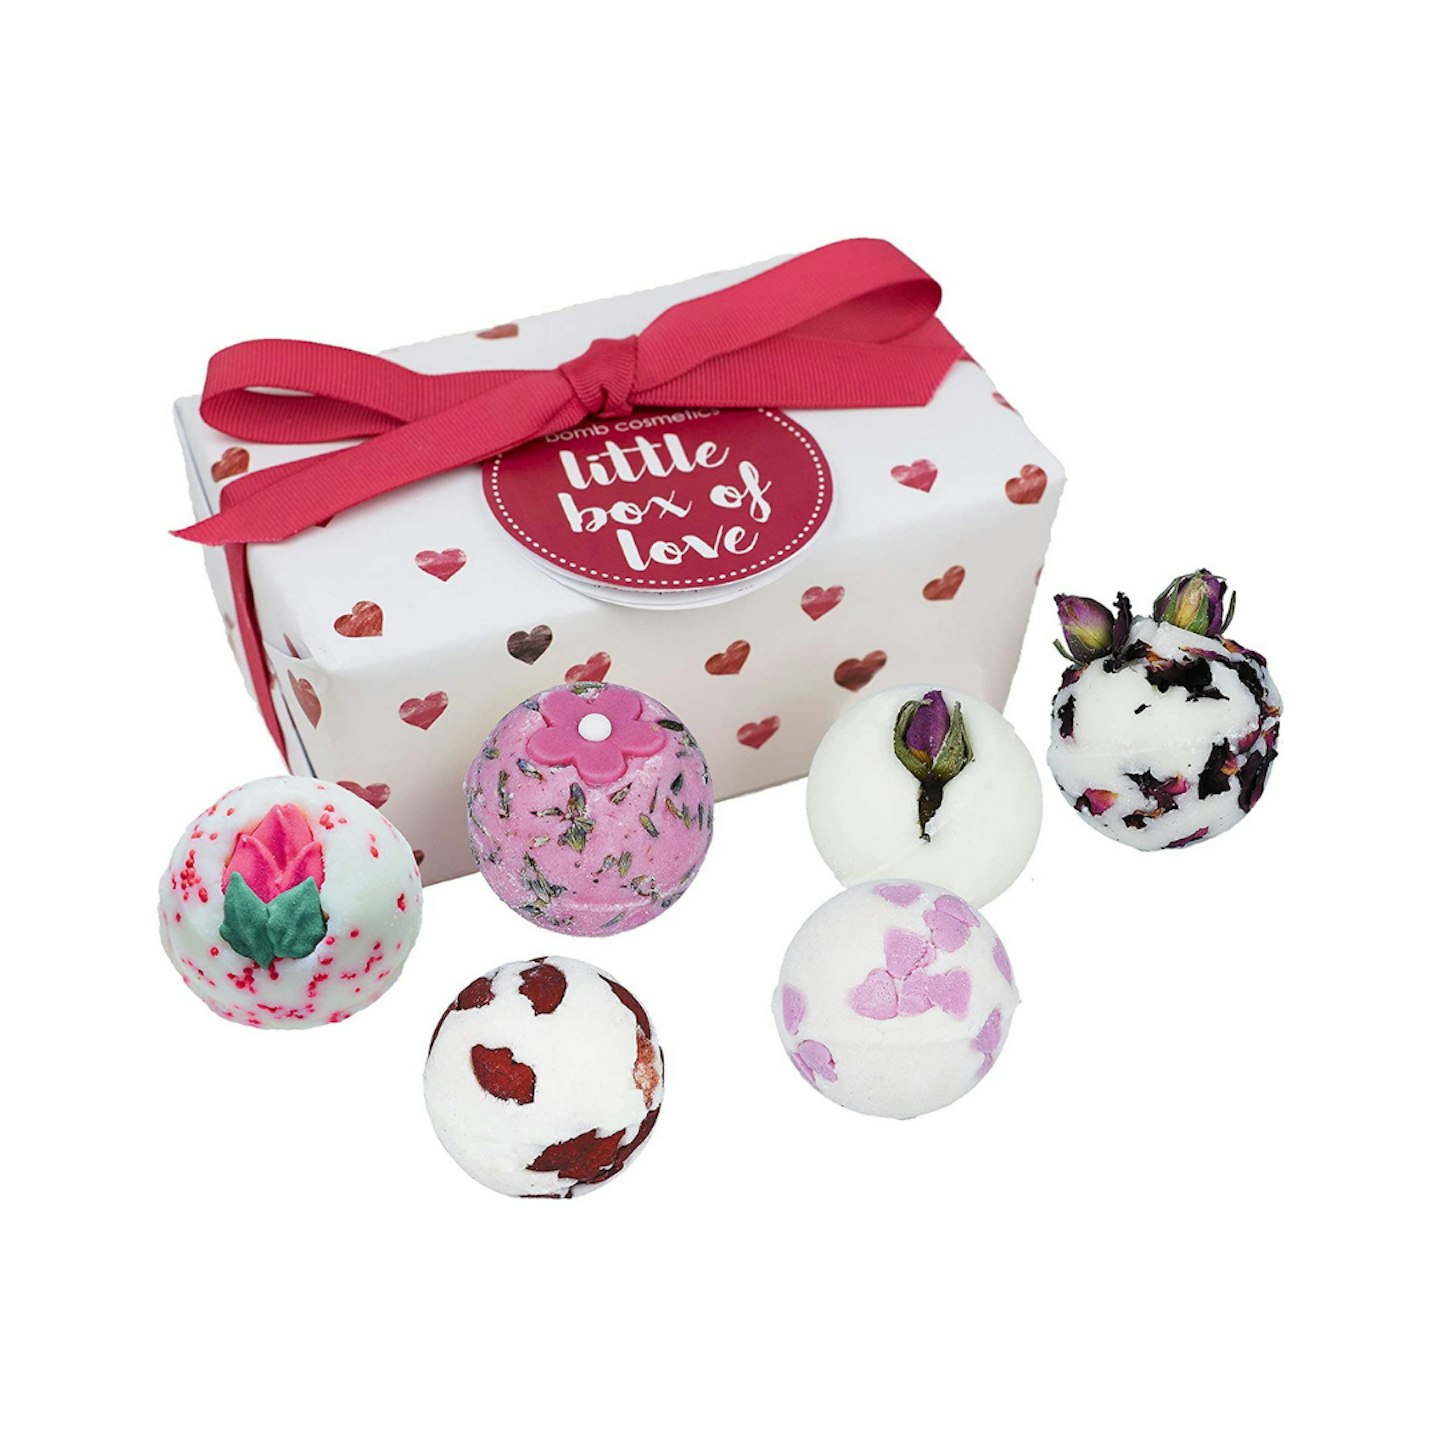 Bomb Cosmetics Little Box of Love Ballotin Gift Set